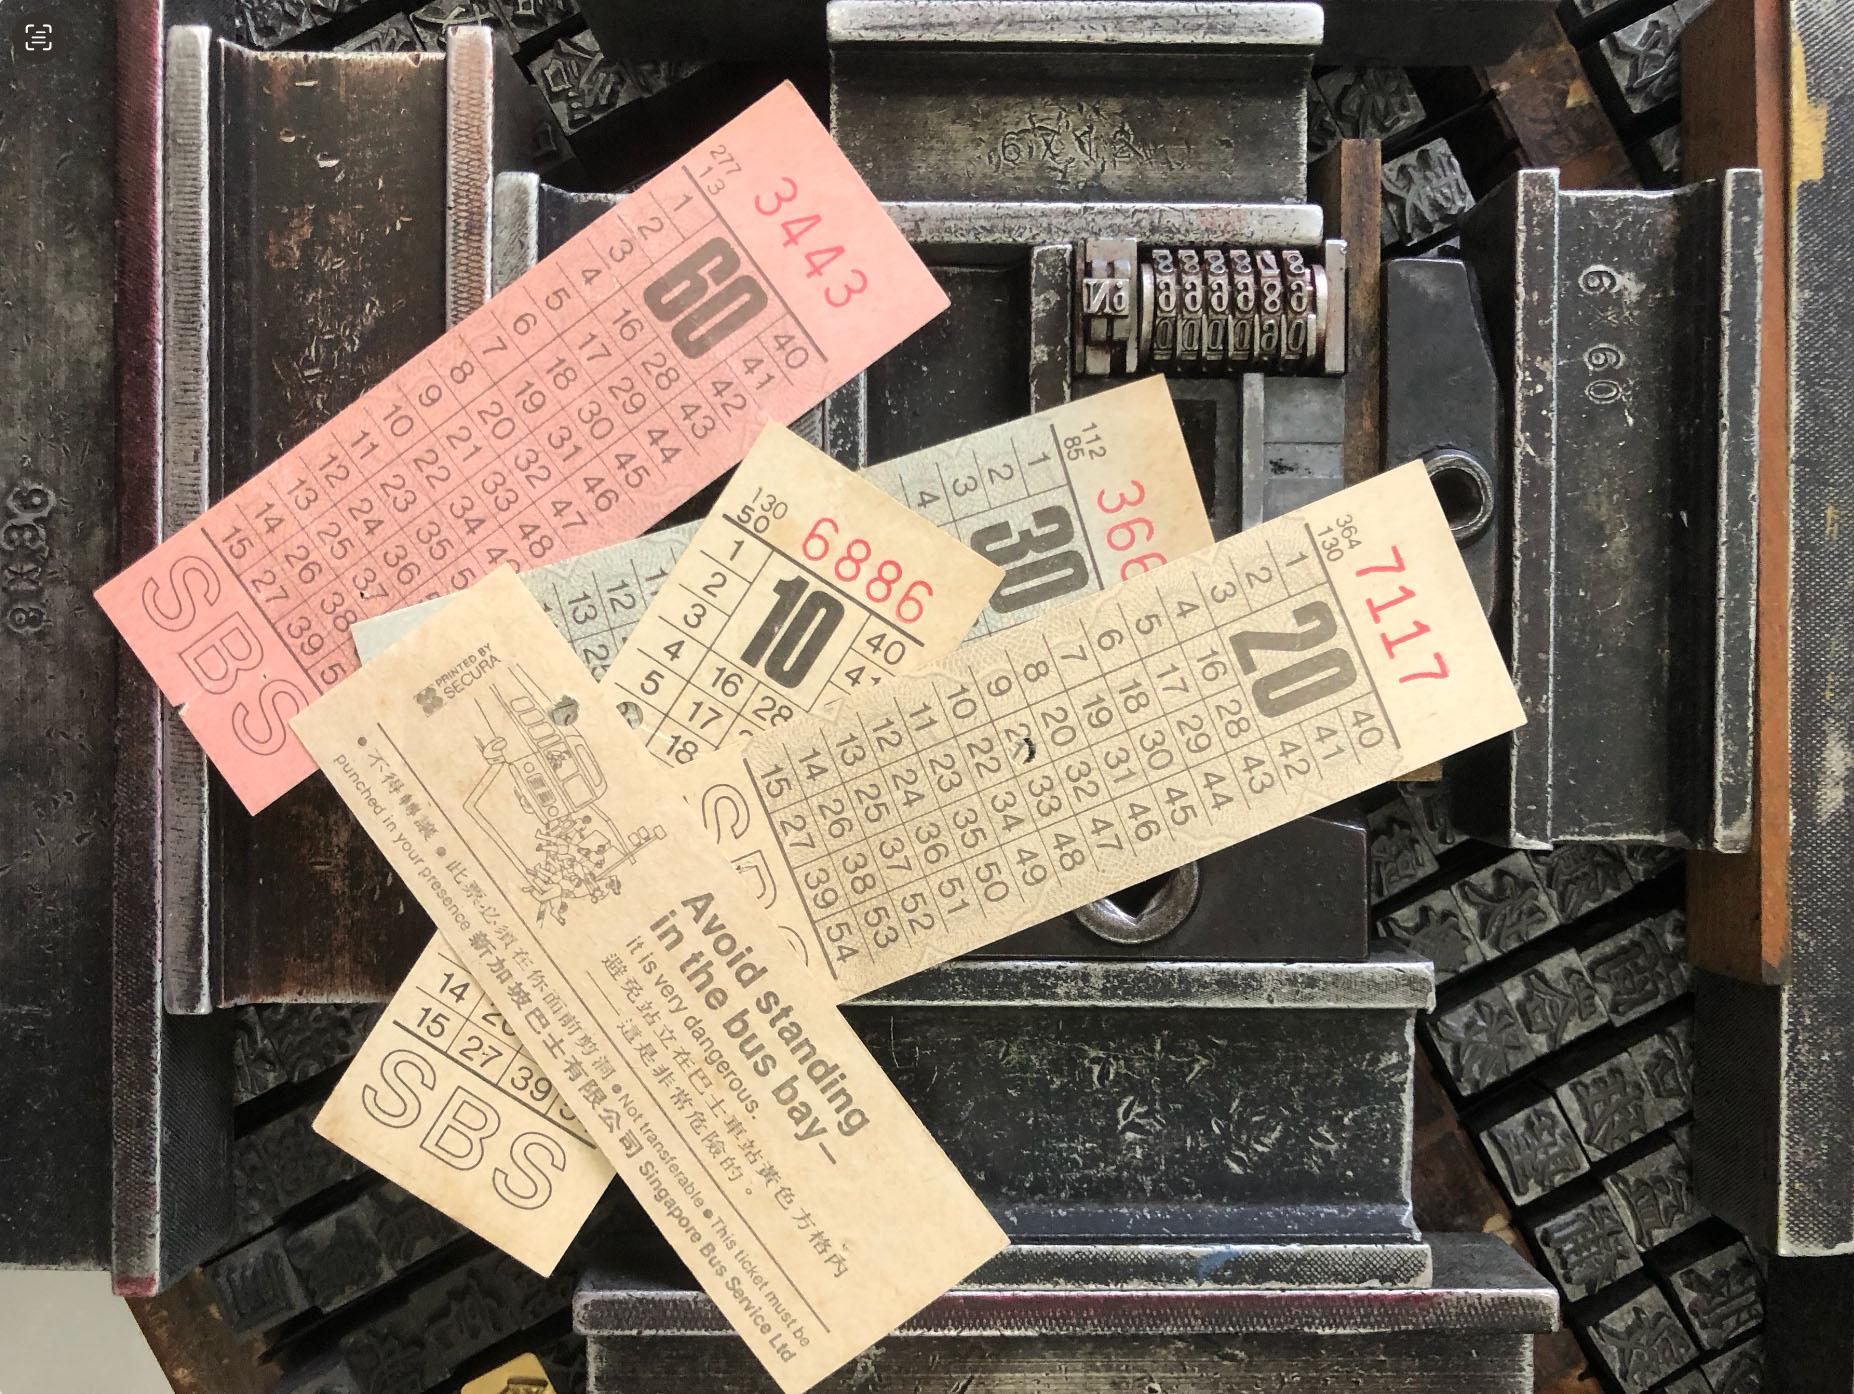 Overlay shot of old-school bus tickets